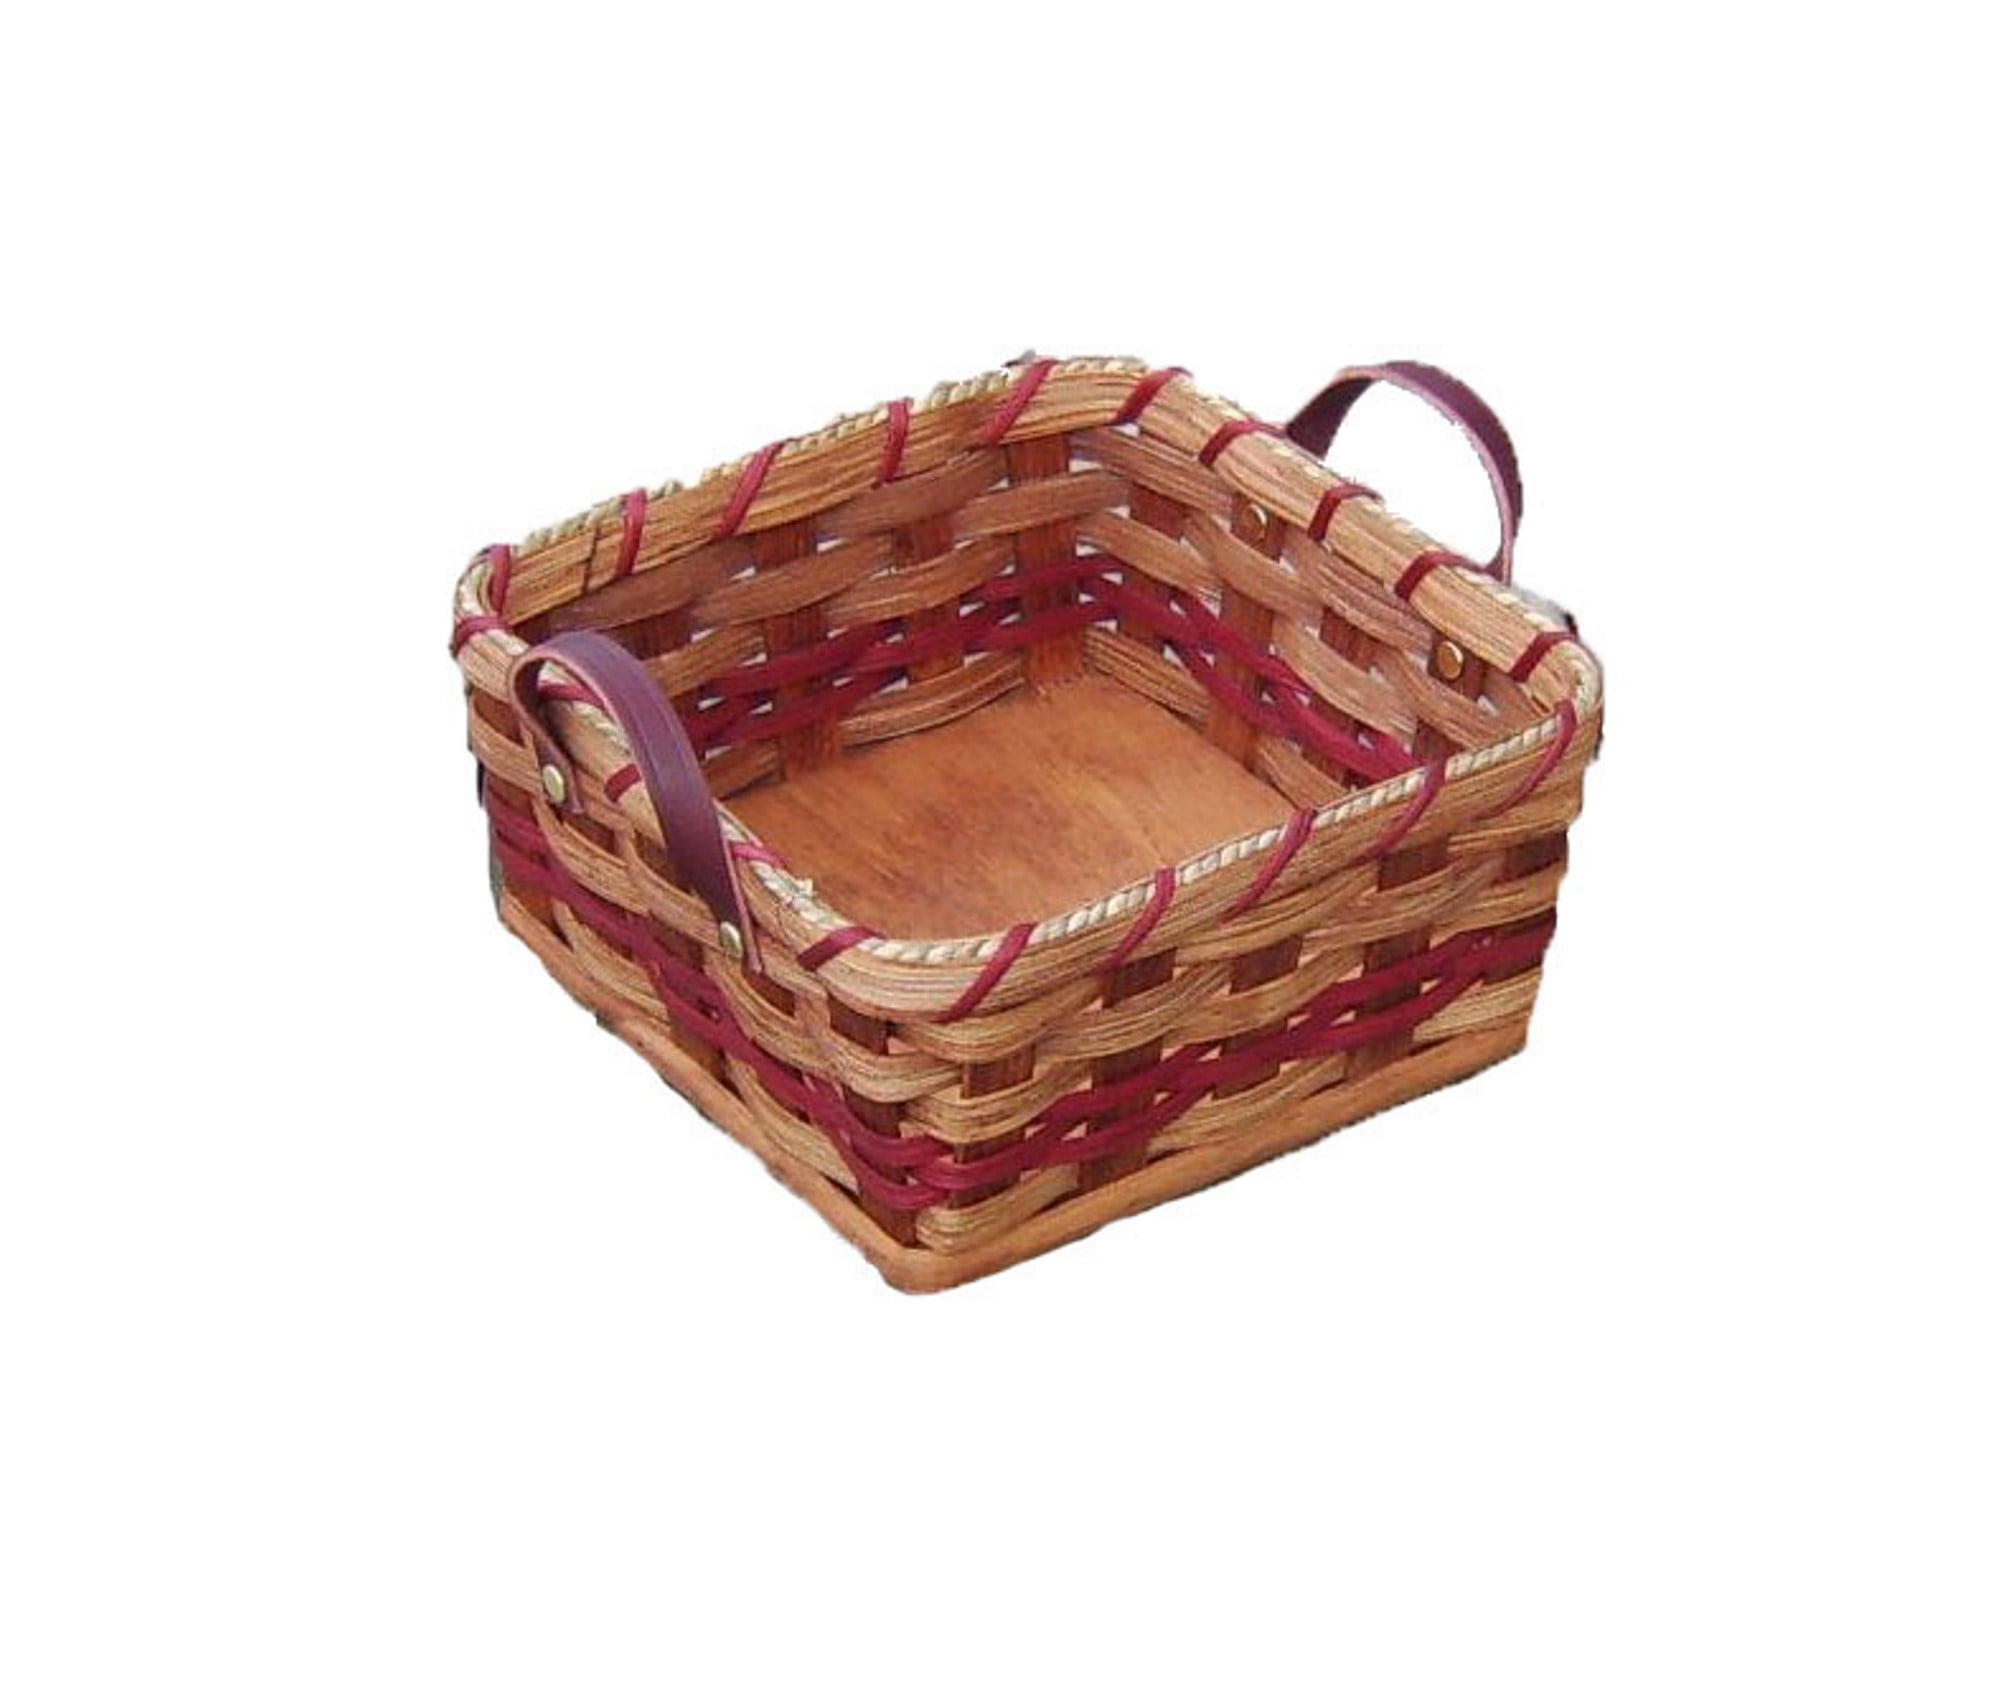 2-Tier Basket Storage | Large Amish Wicker Decorative Organizer